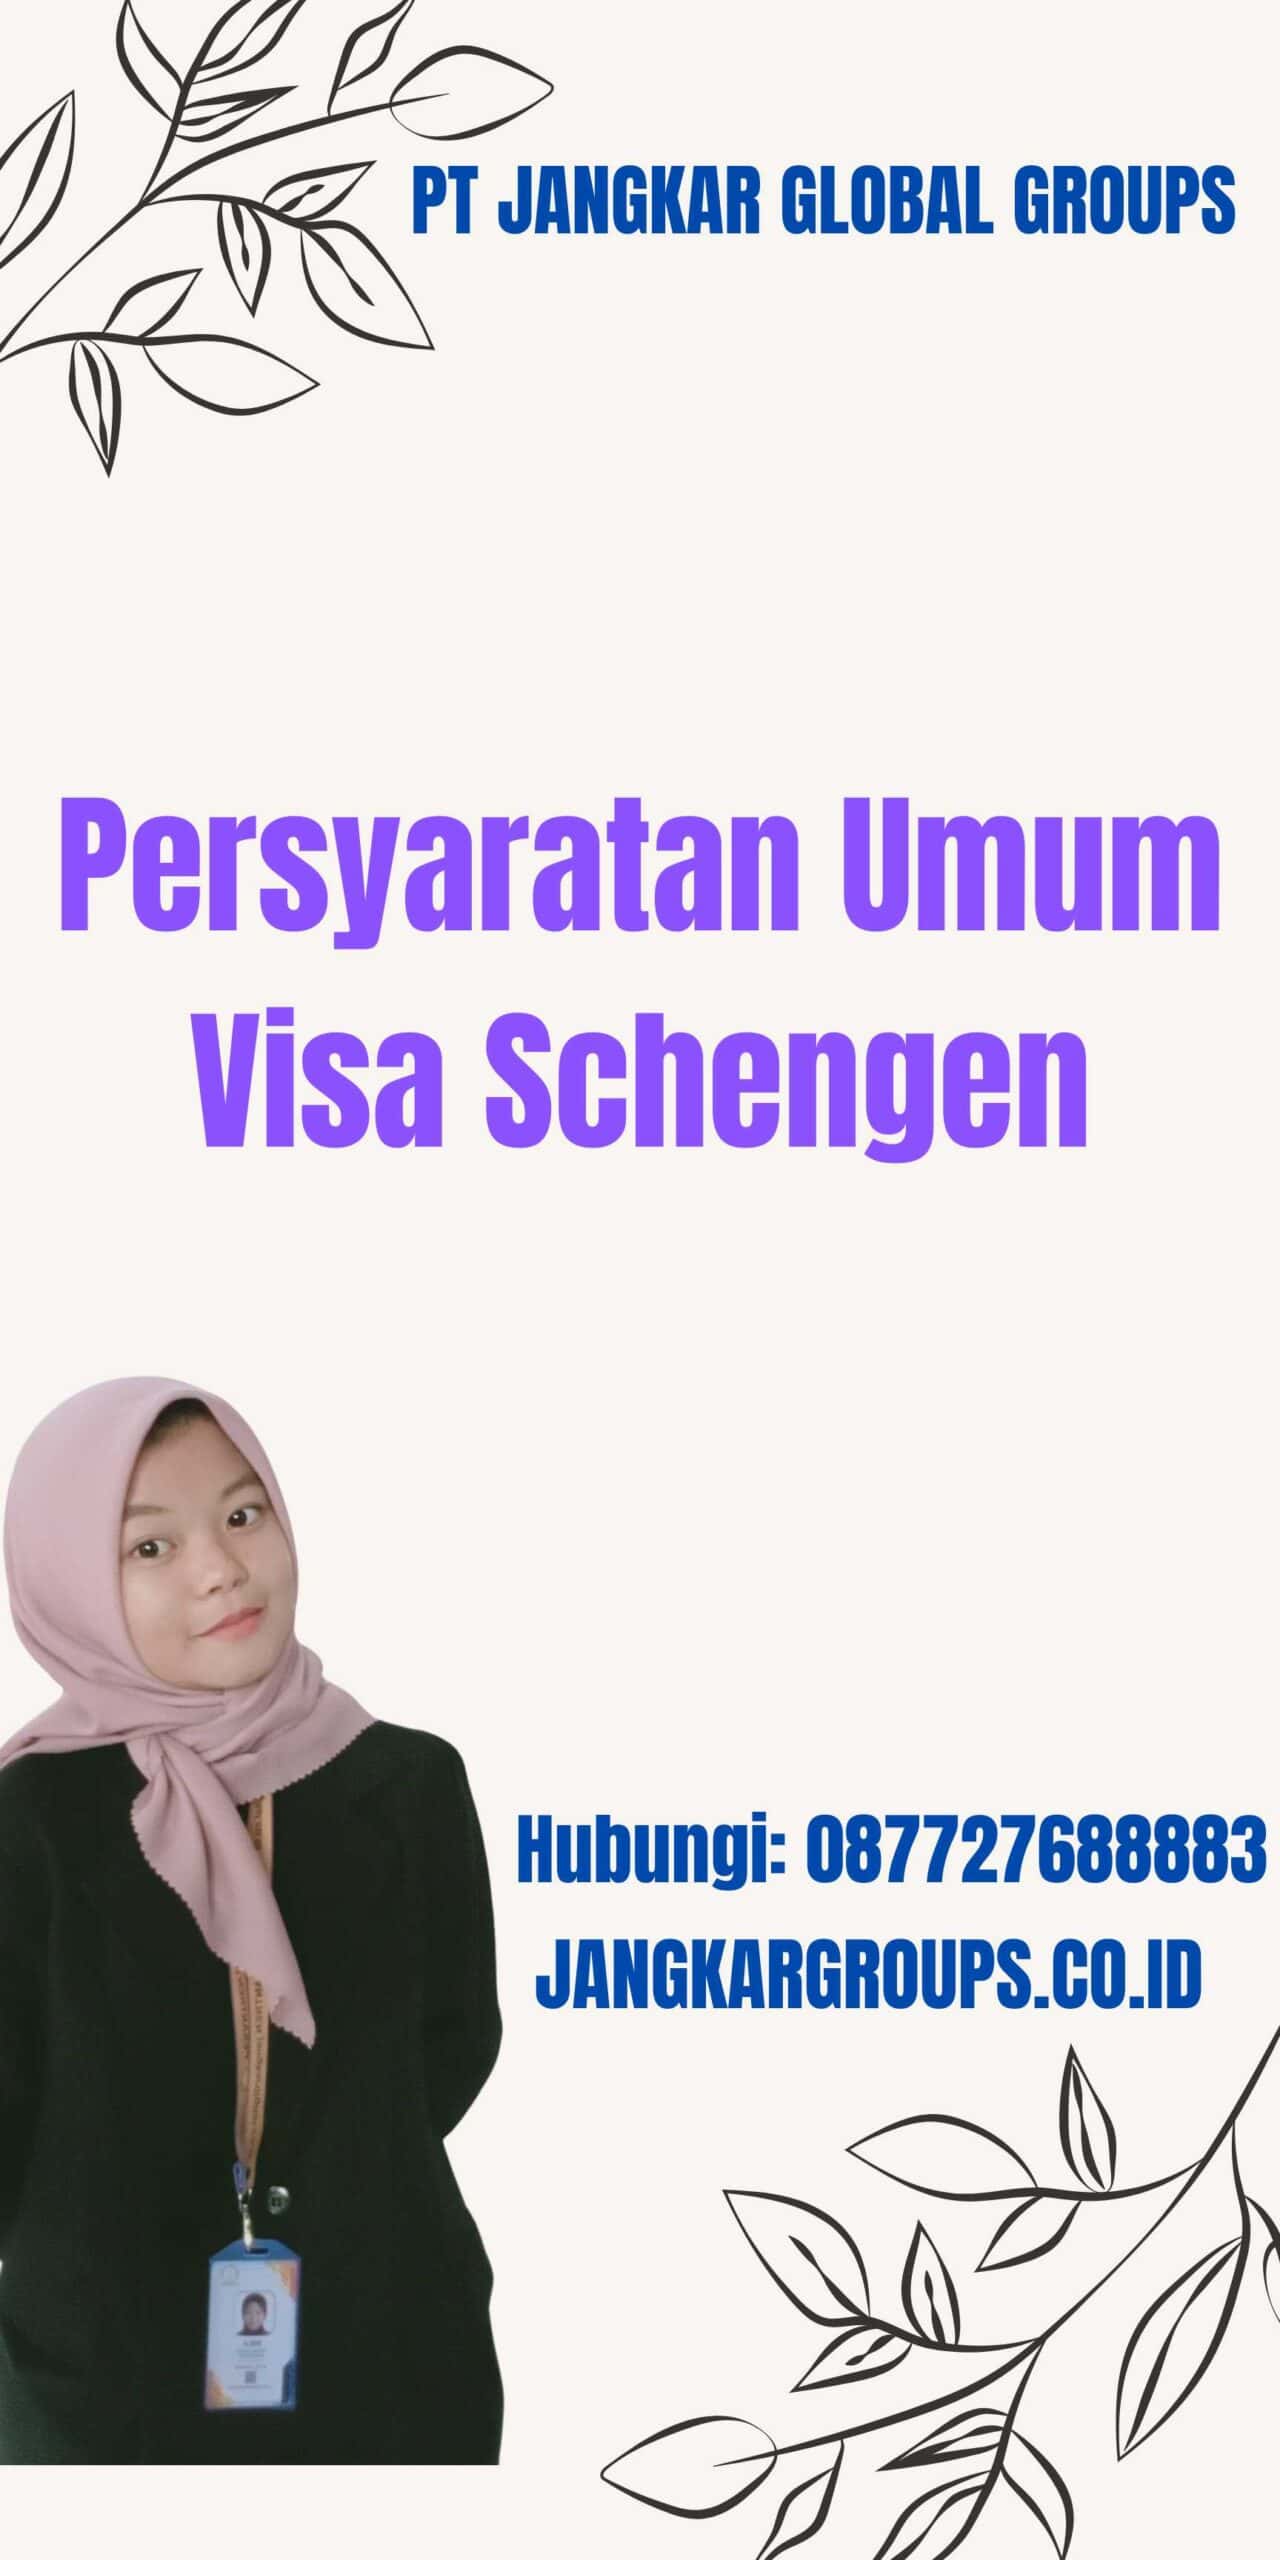 Persyaratan Umum Visa Schengen